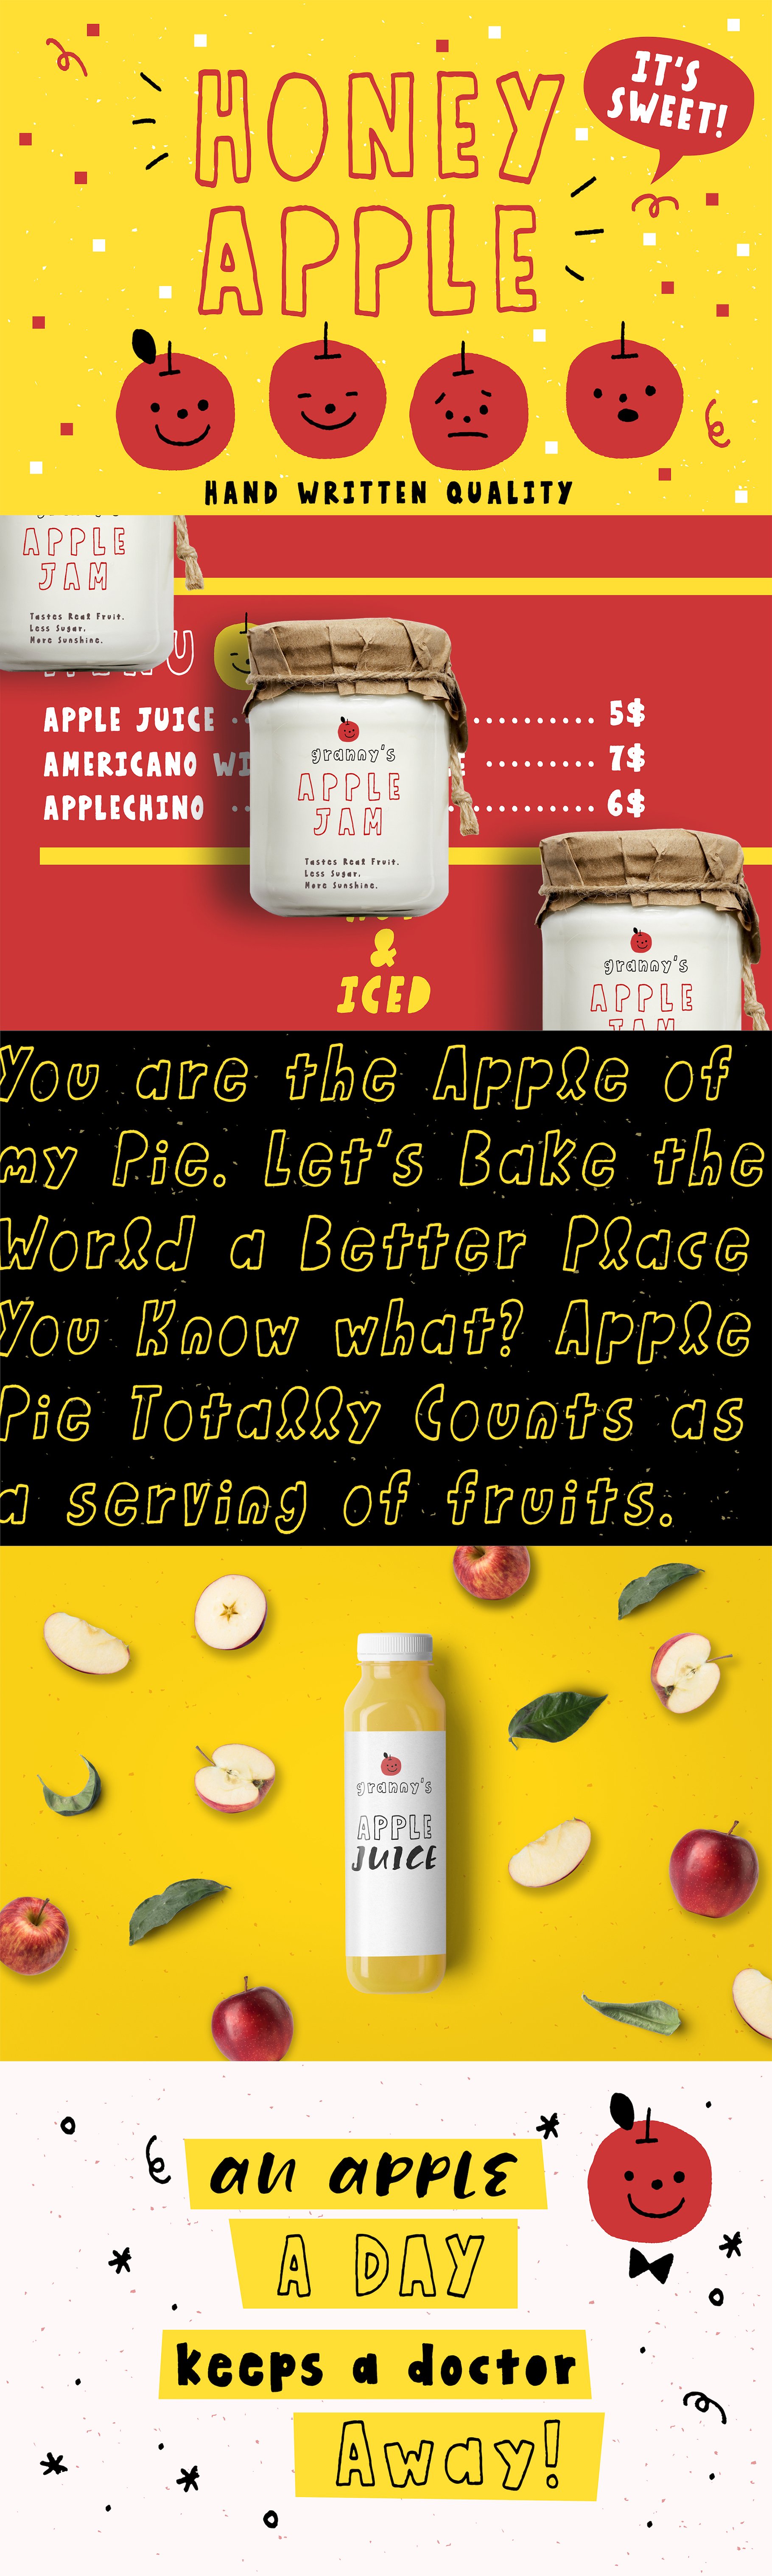 Honey Apple - Juicy Typeface cover image.